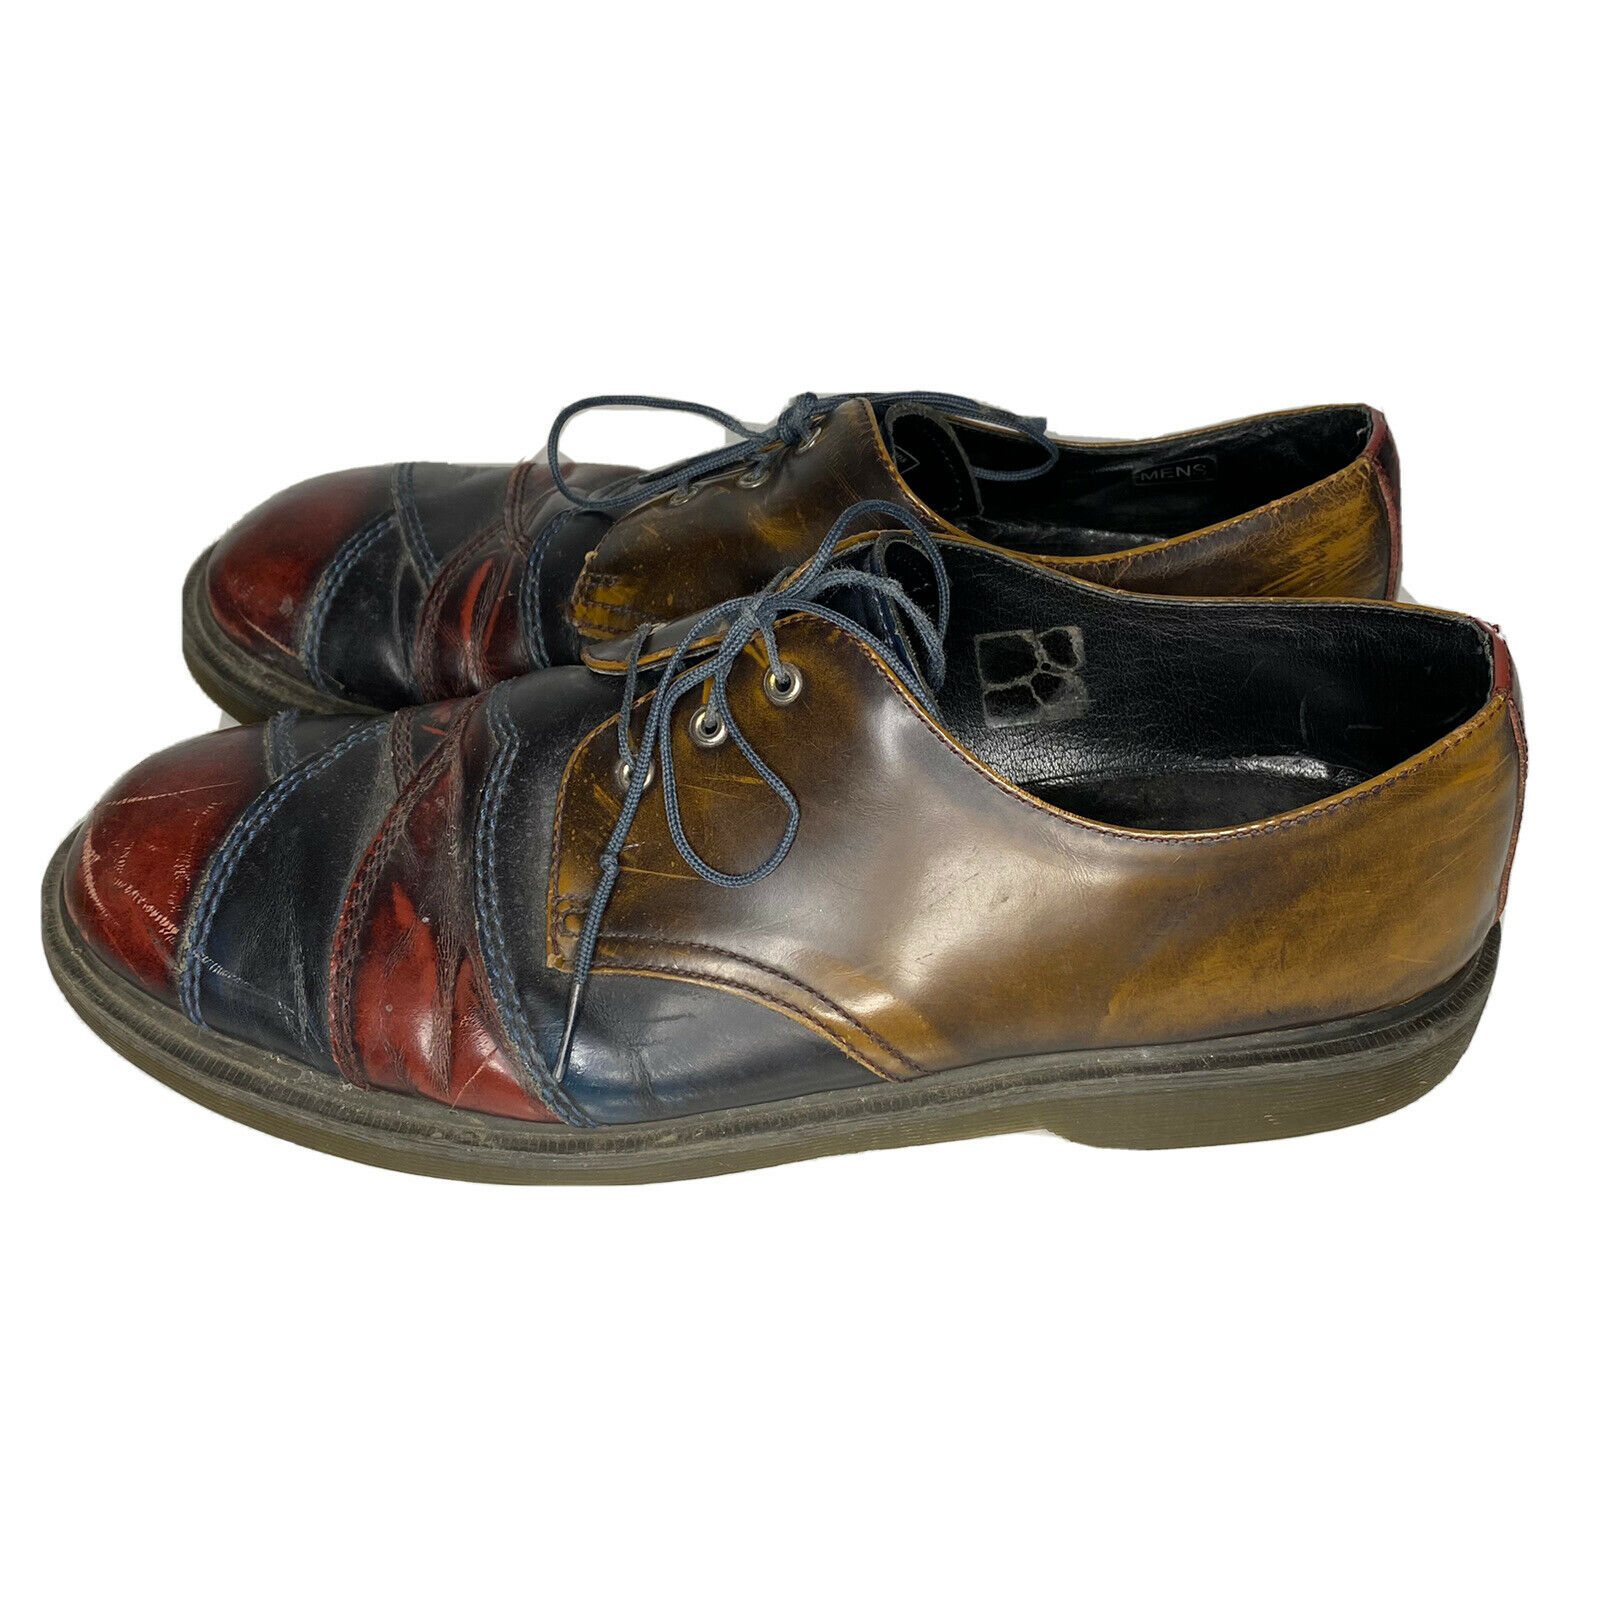 Dr. Doc Martens Stax 3-Eye Bandage Brown Oxford Shoes Size 13 UK 12